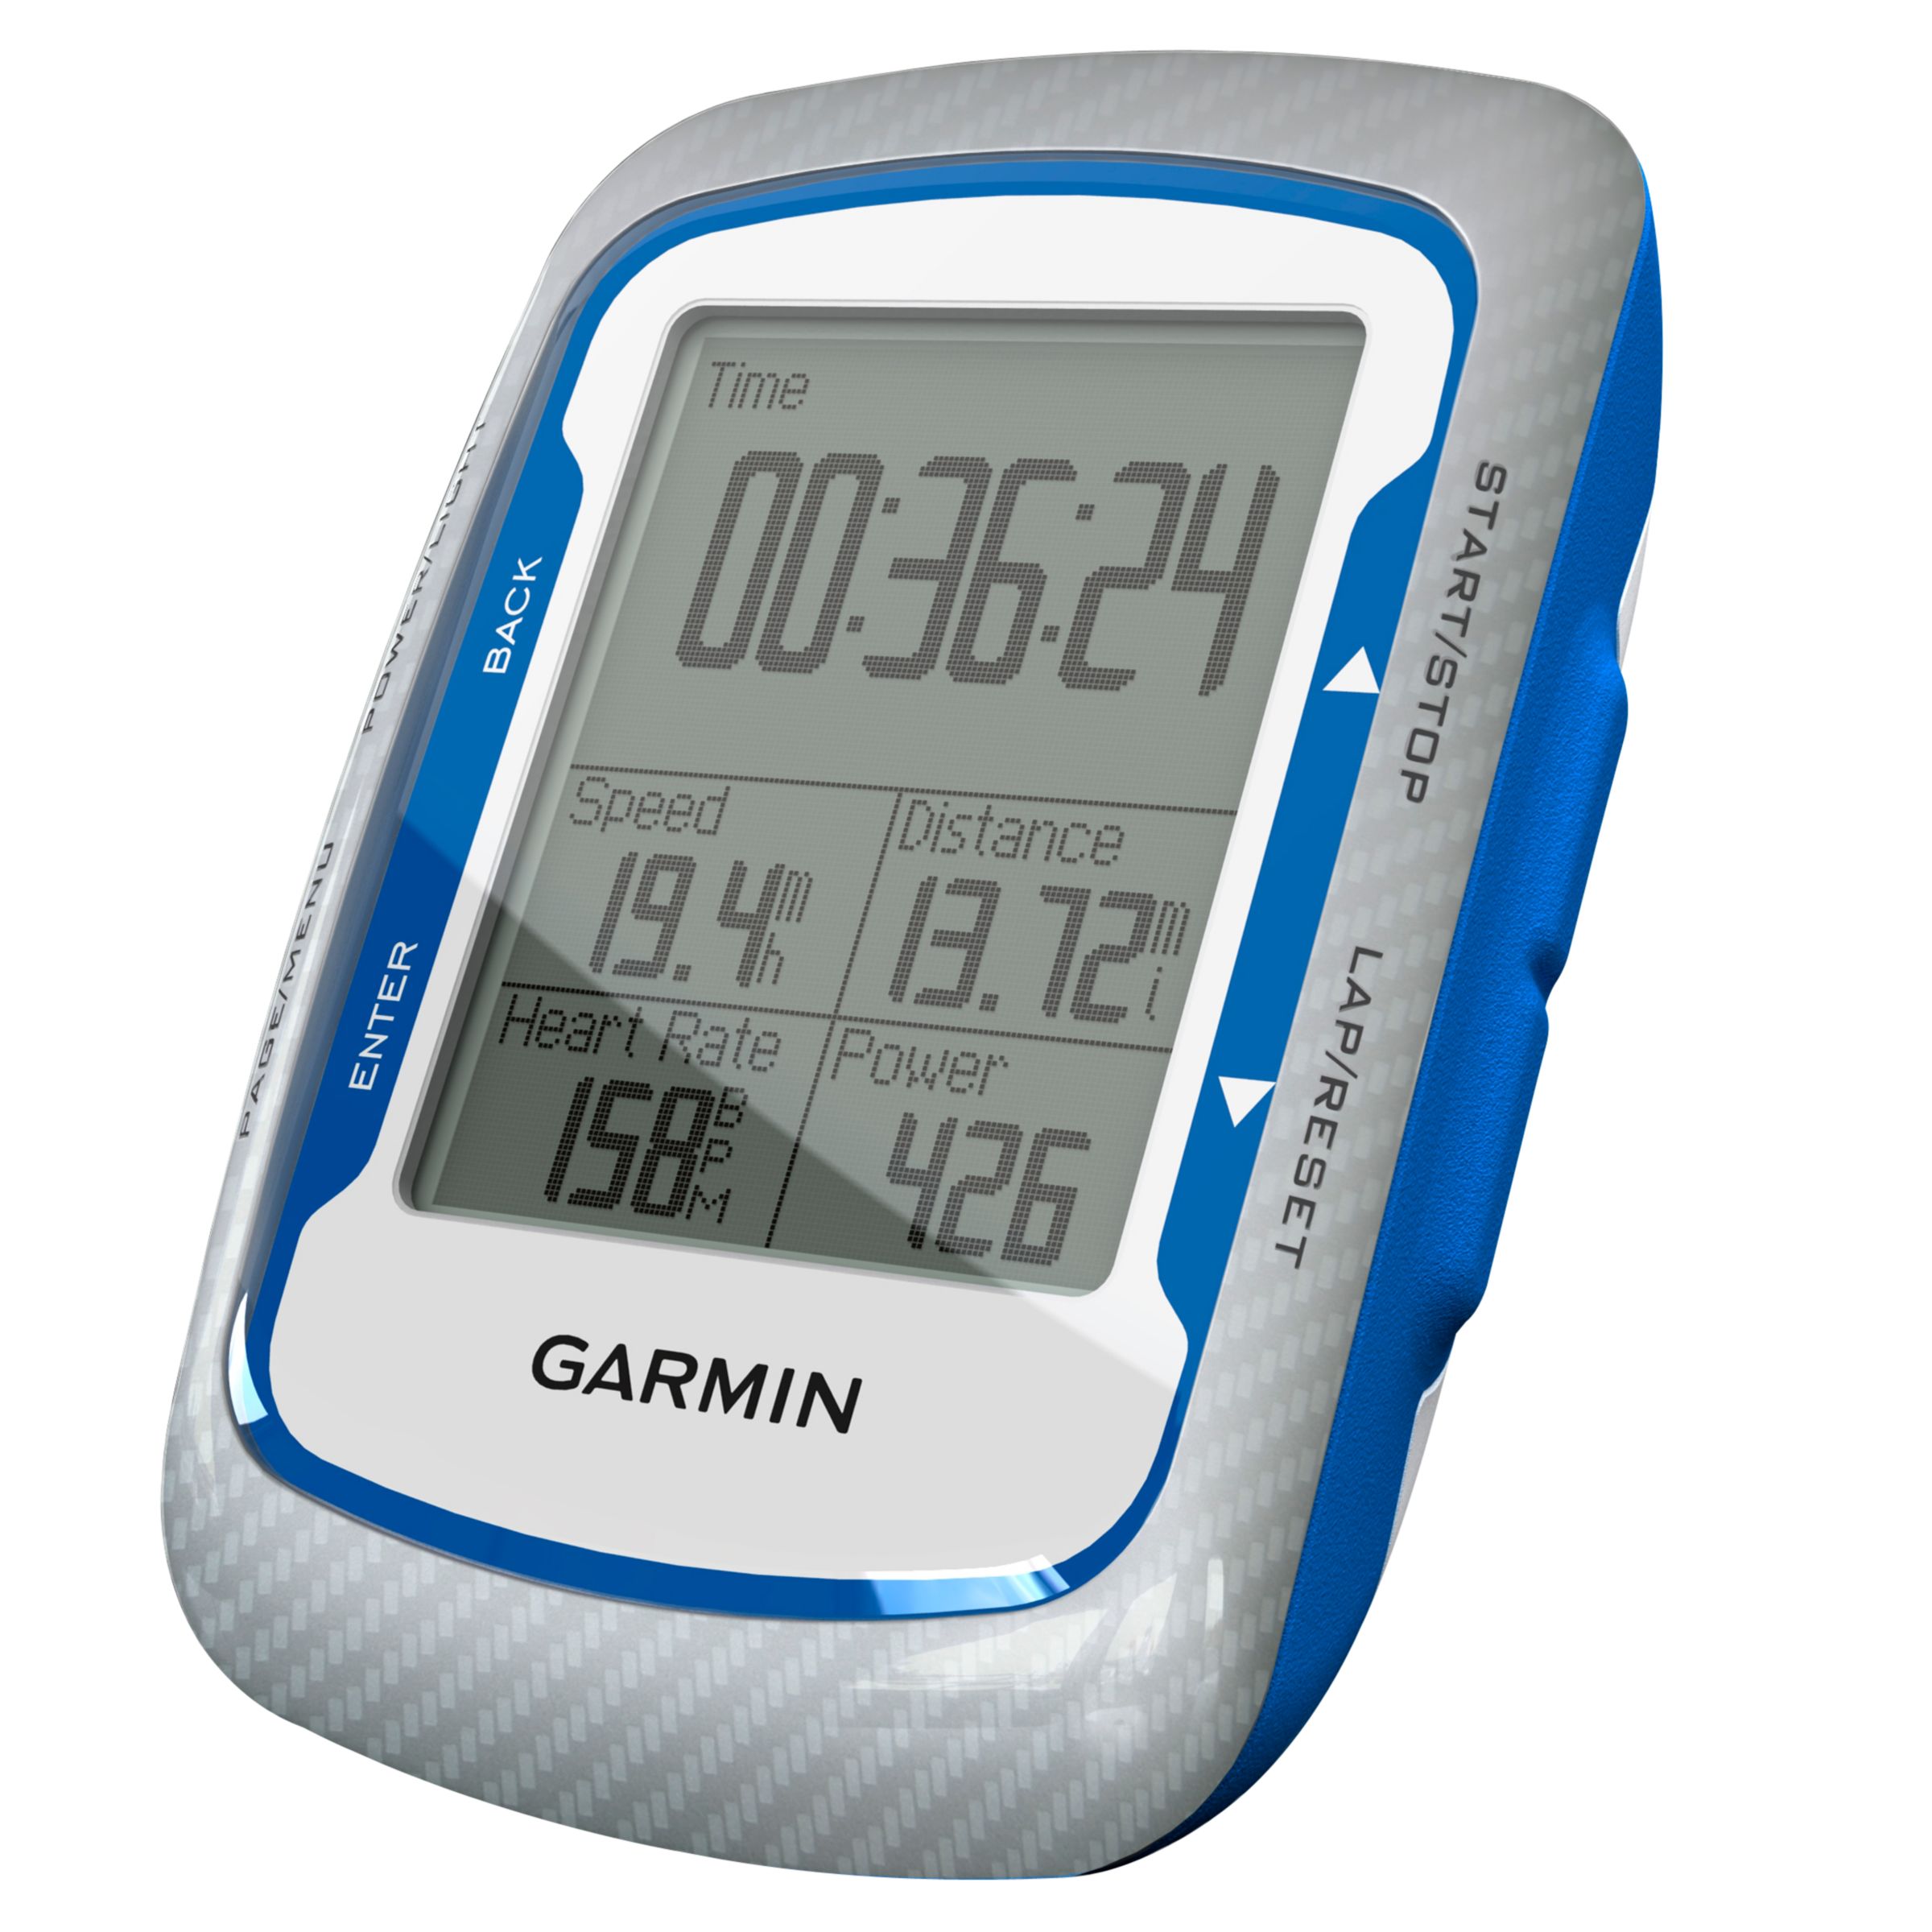 Garmin Edge 500 Cycle GPS Receiver at John Lewis